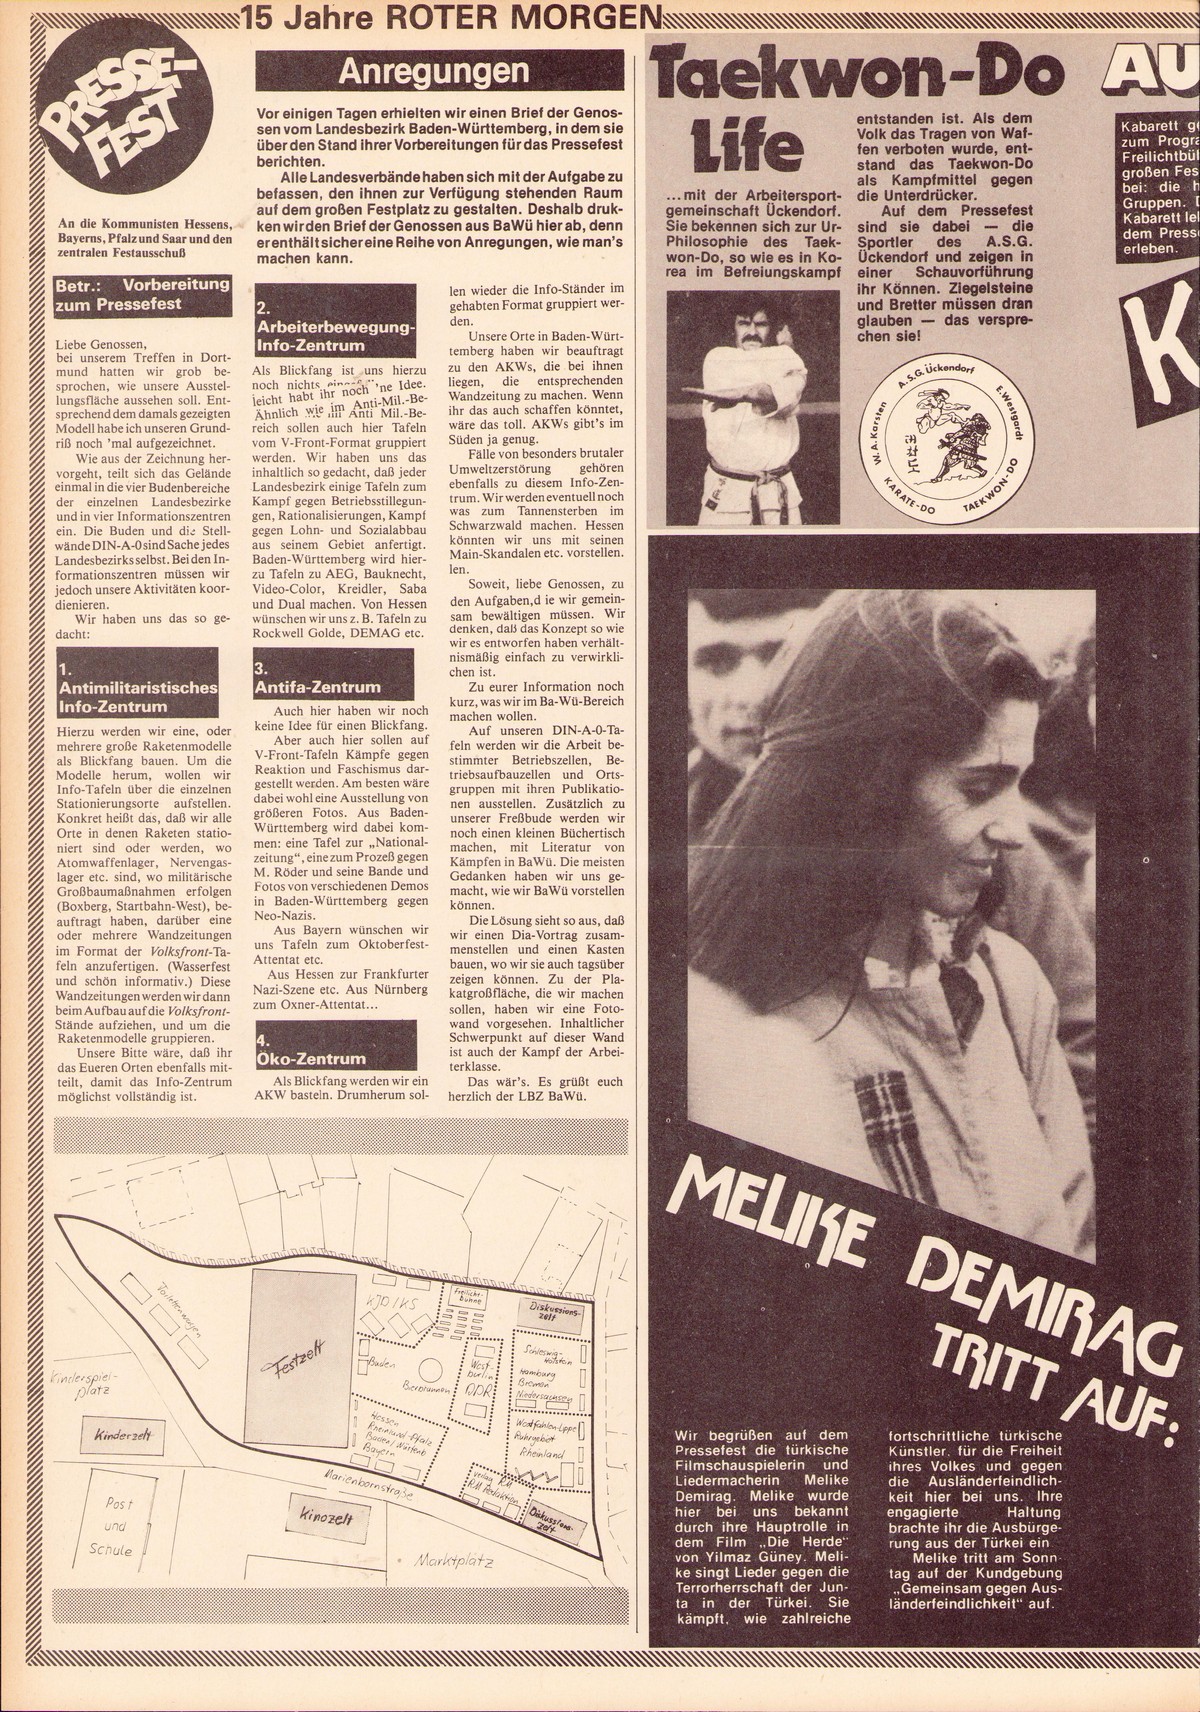 Roter Morgen, 16. Jg., 3. September 1982, Nr. 35, Seite 8